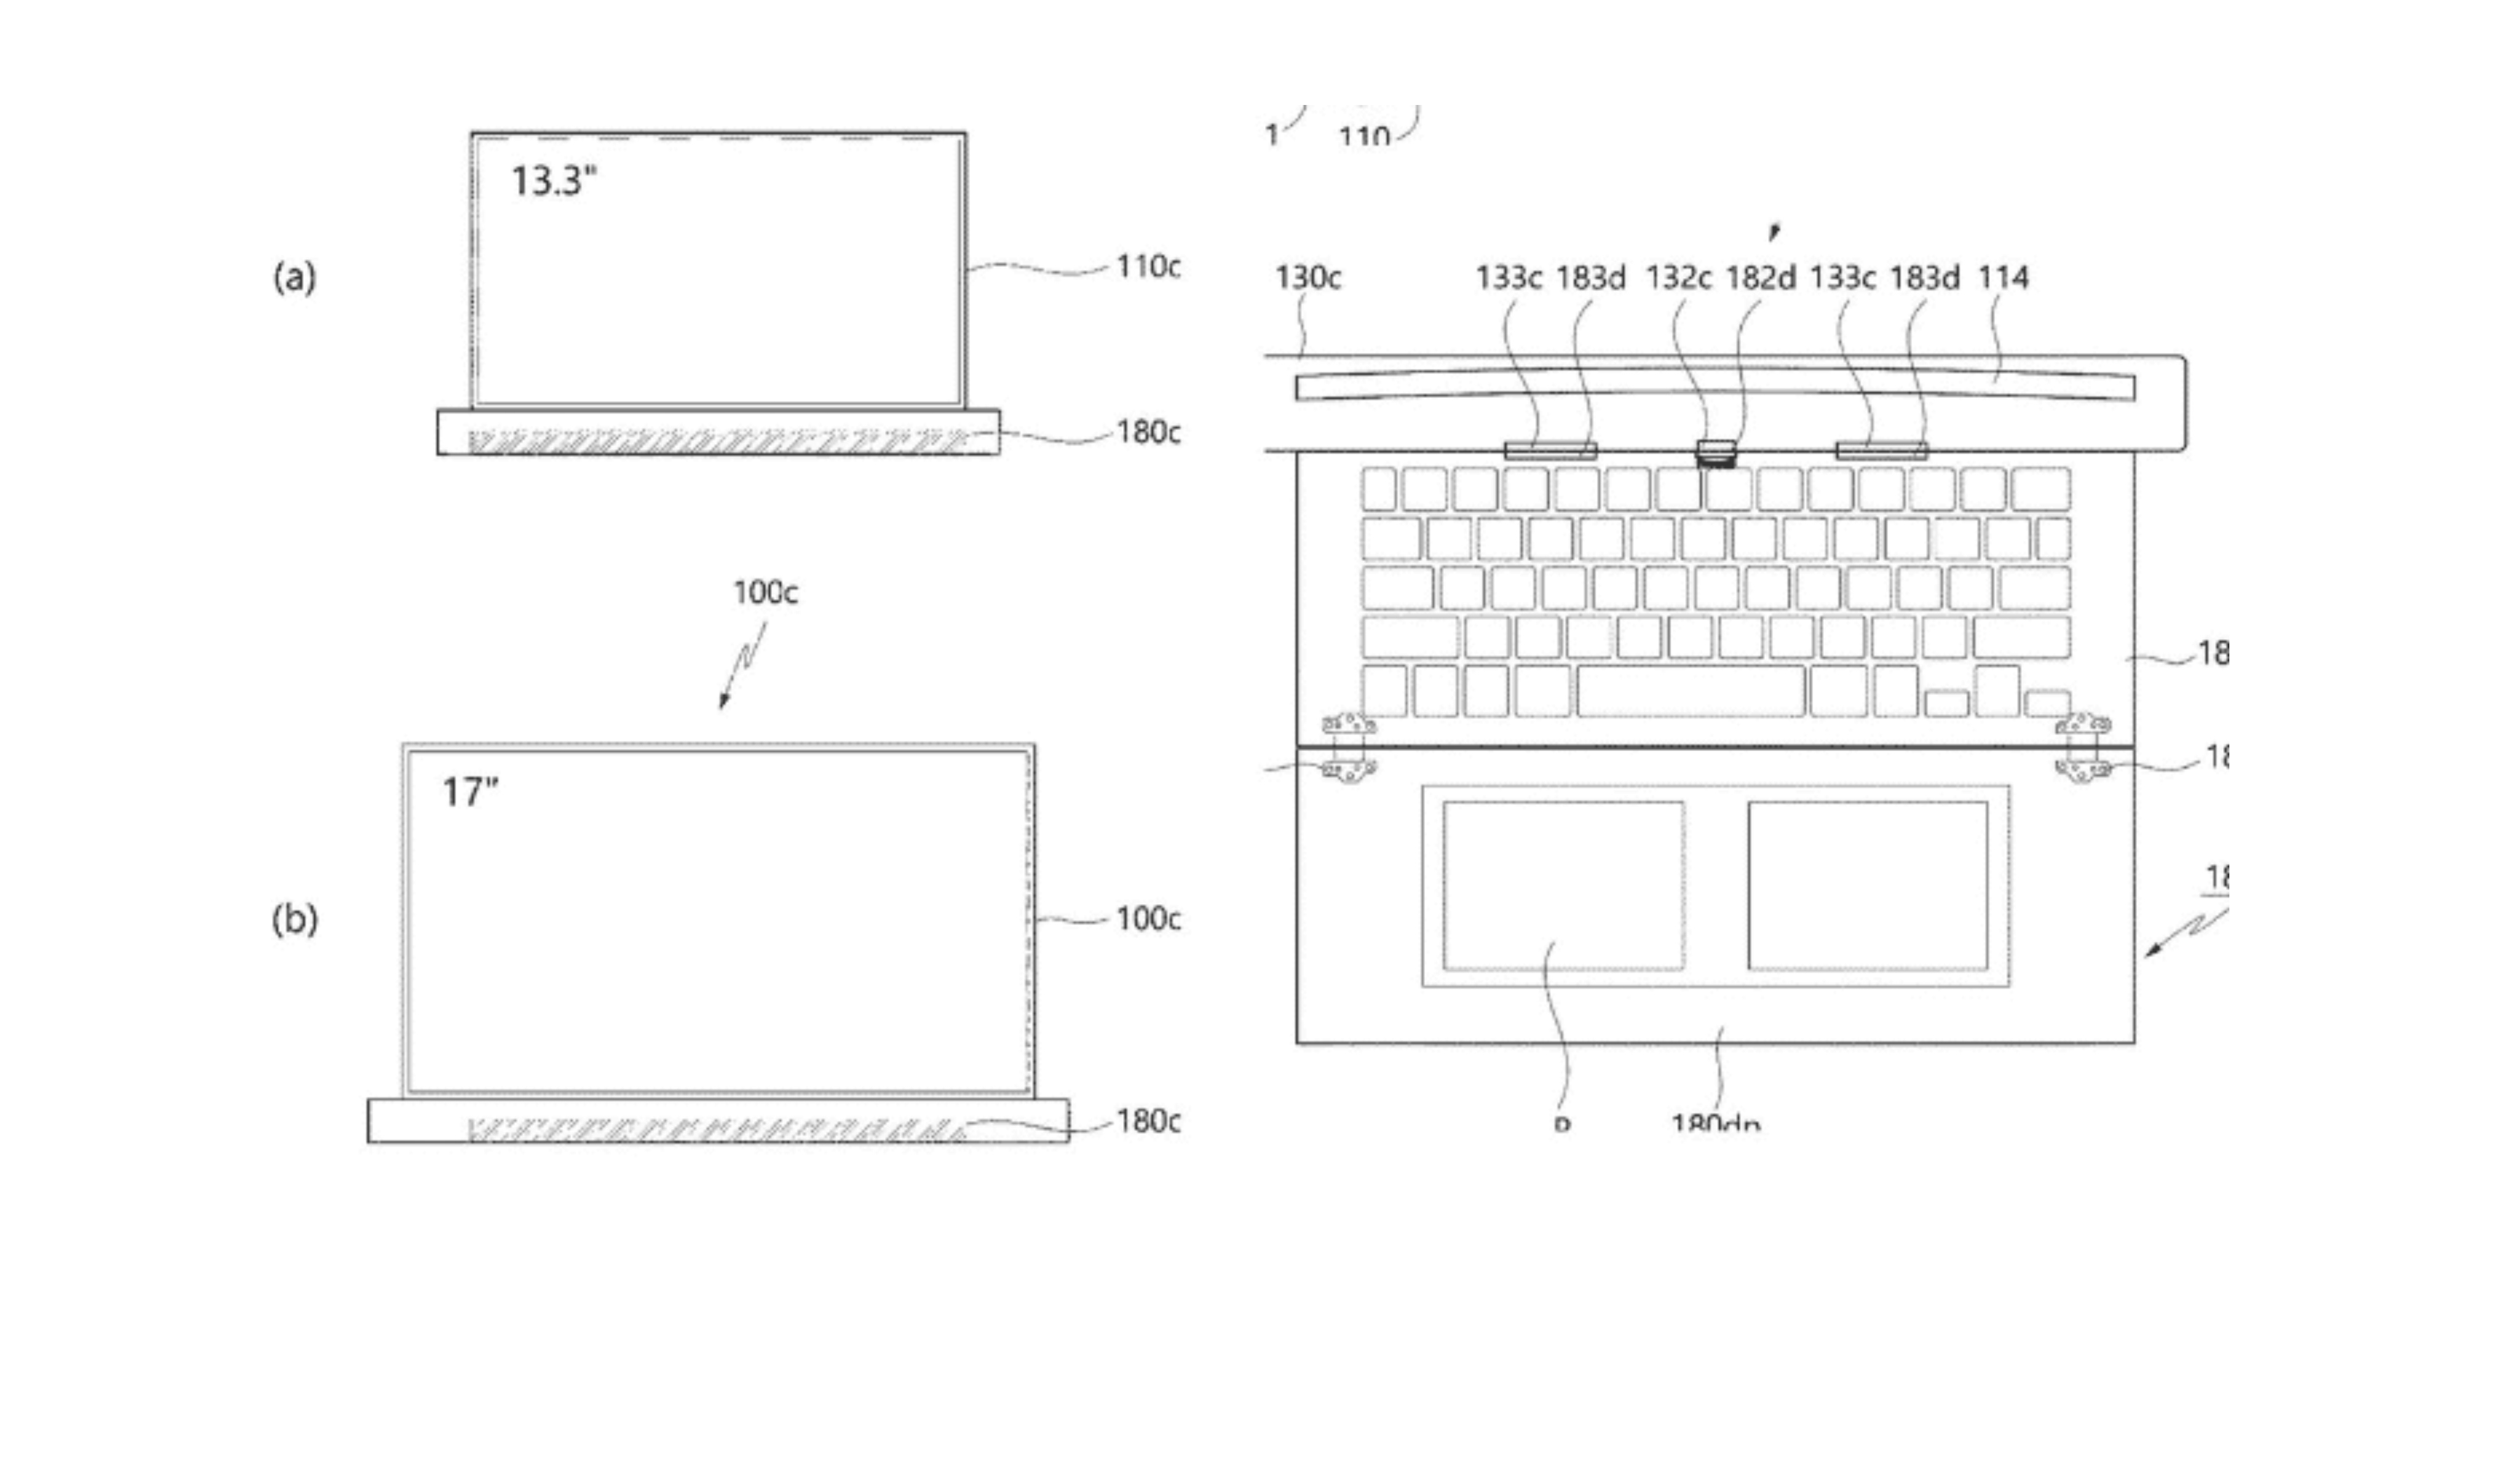 LG براءة اختراع تصميم كمبيوتر محمول قابل للدحرجة 